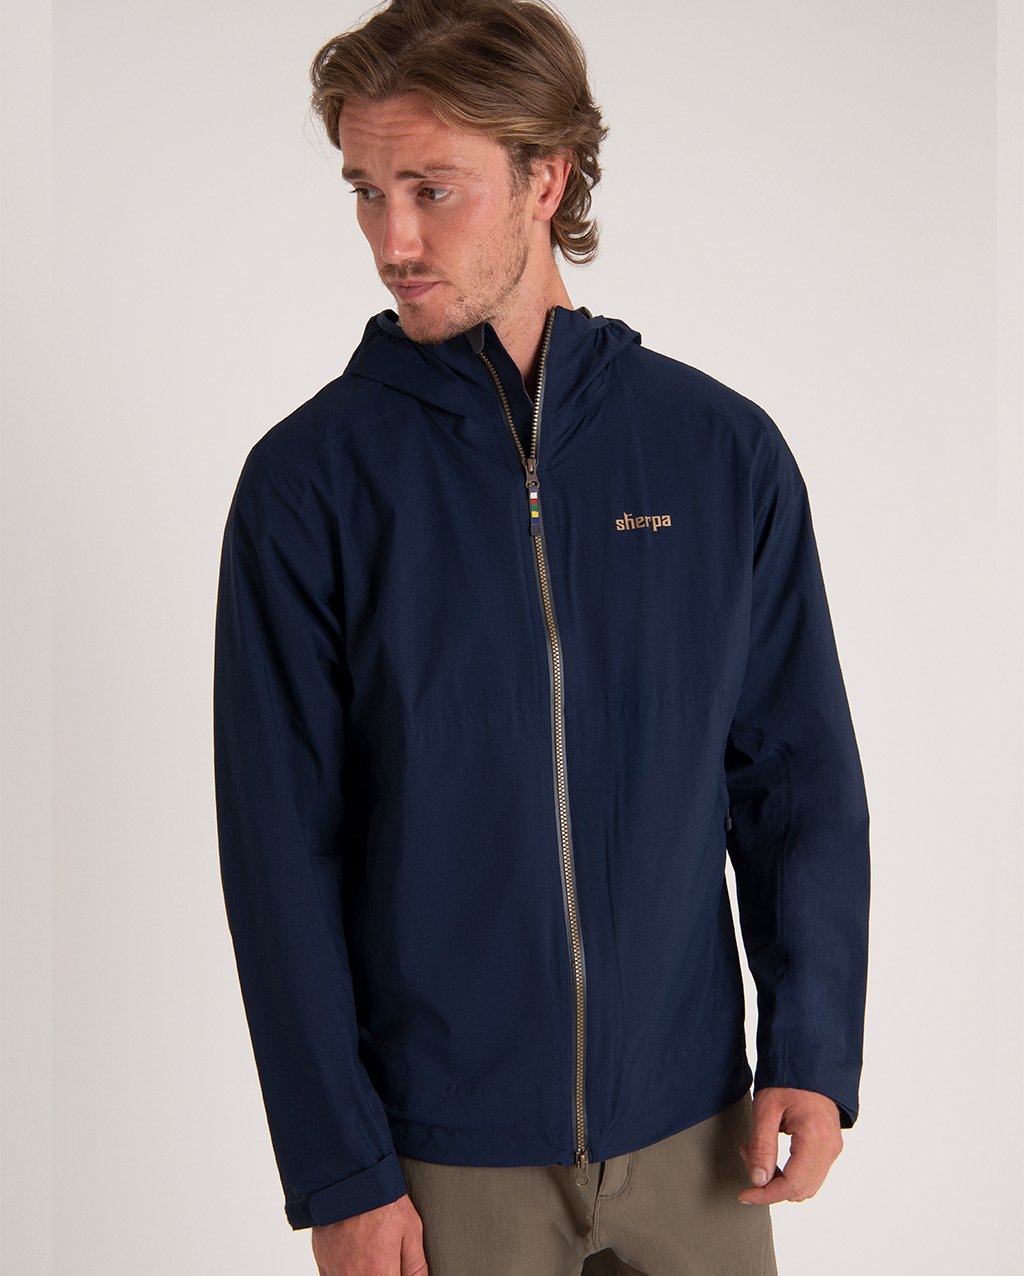 Sherpa Men's Asaar Waterproof 2.5 Layer Jacket